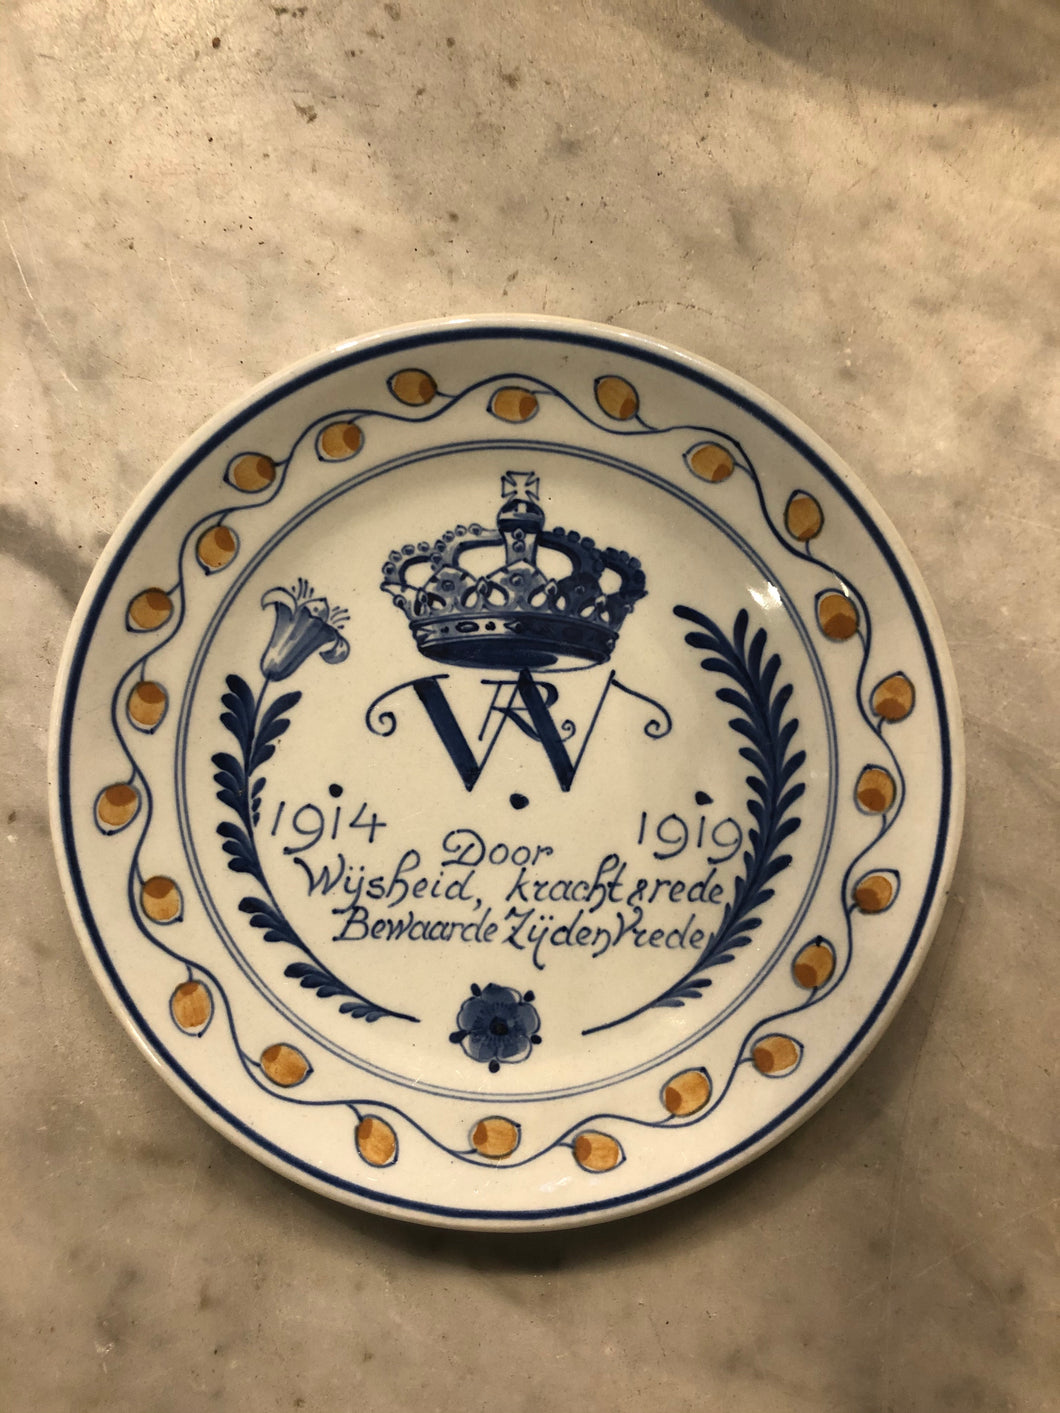 Royal Delft handpainted dutch plate 1914